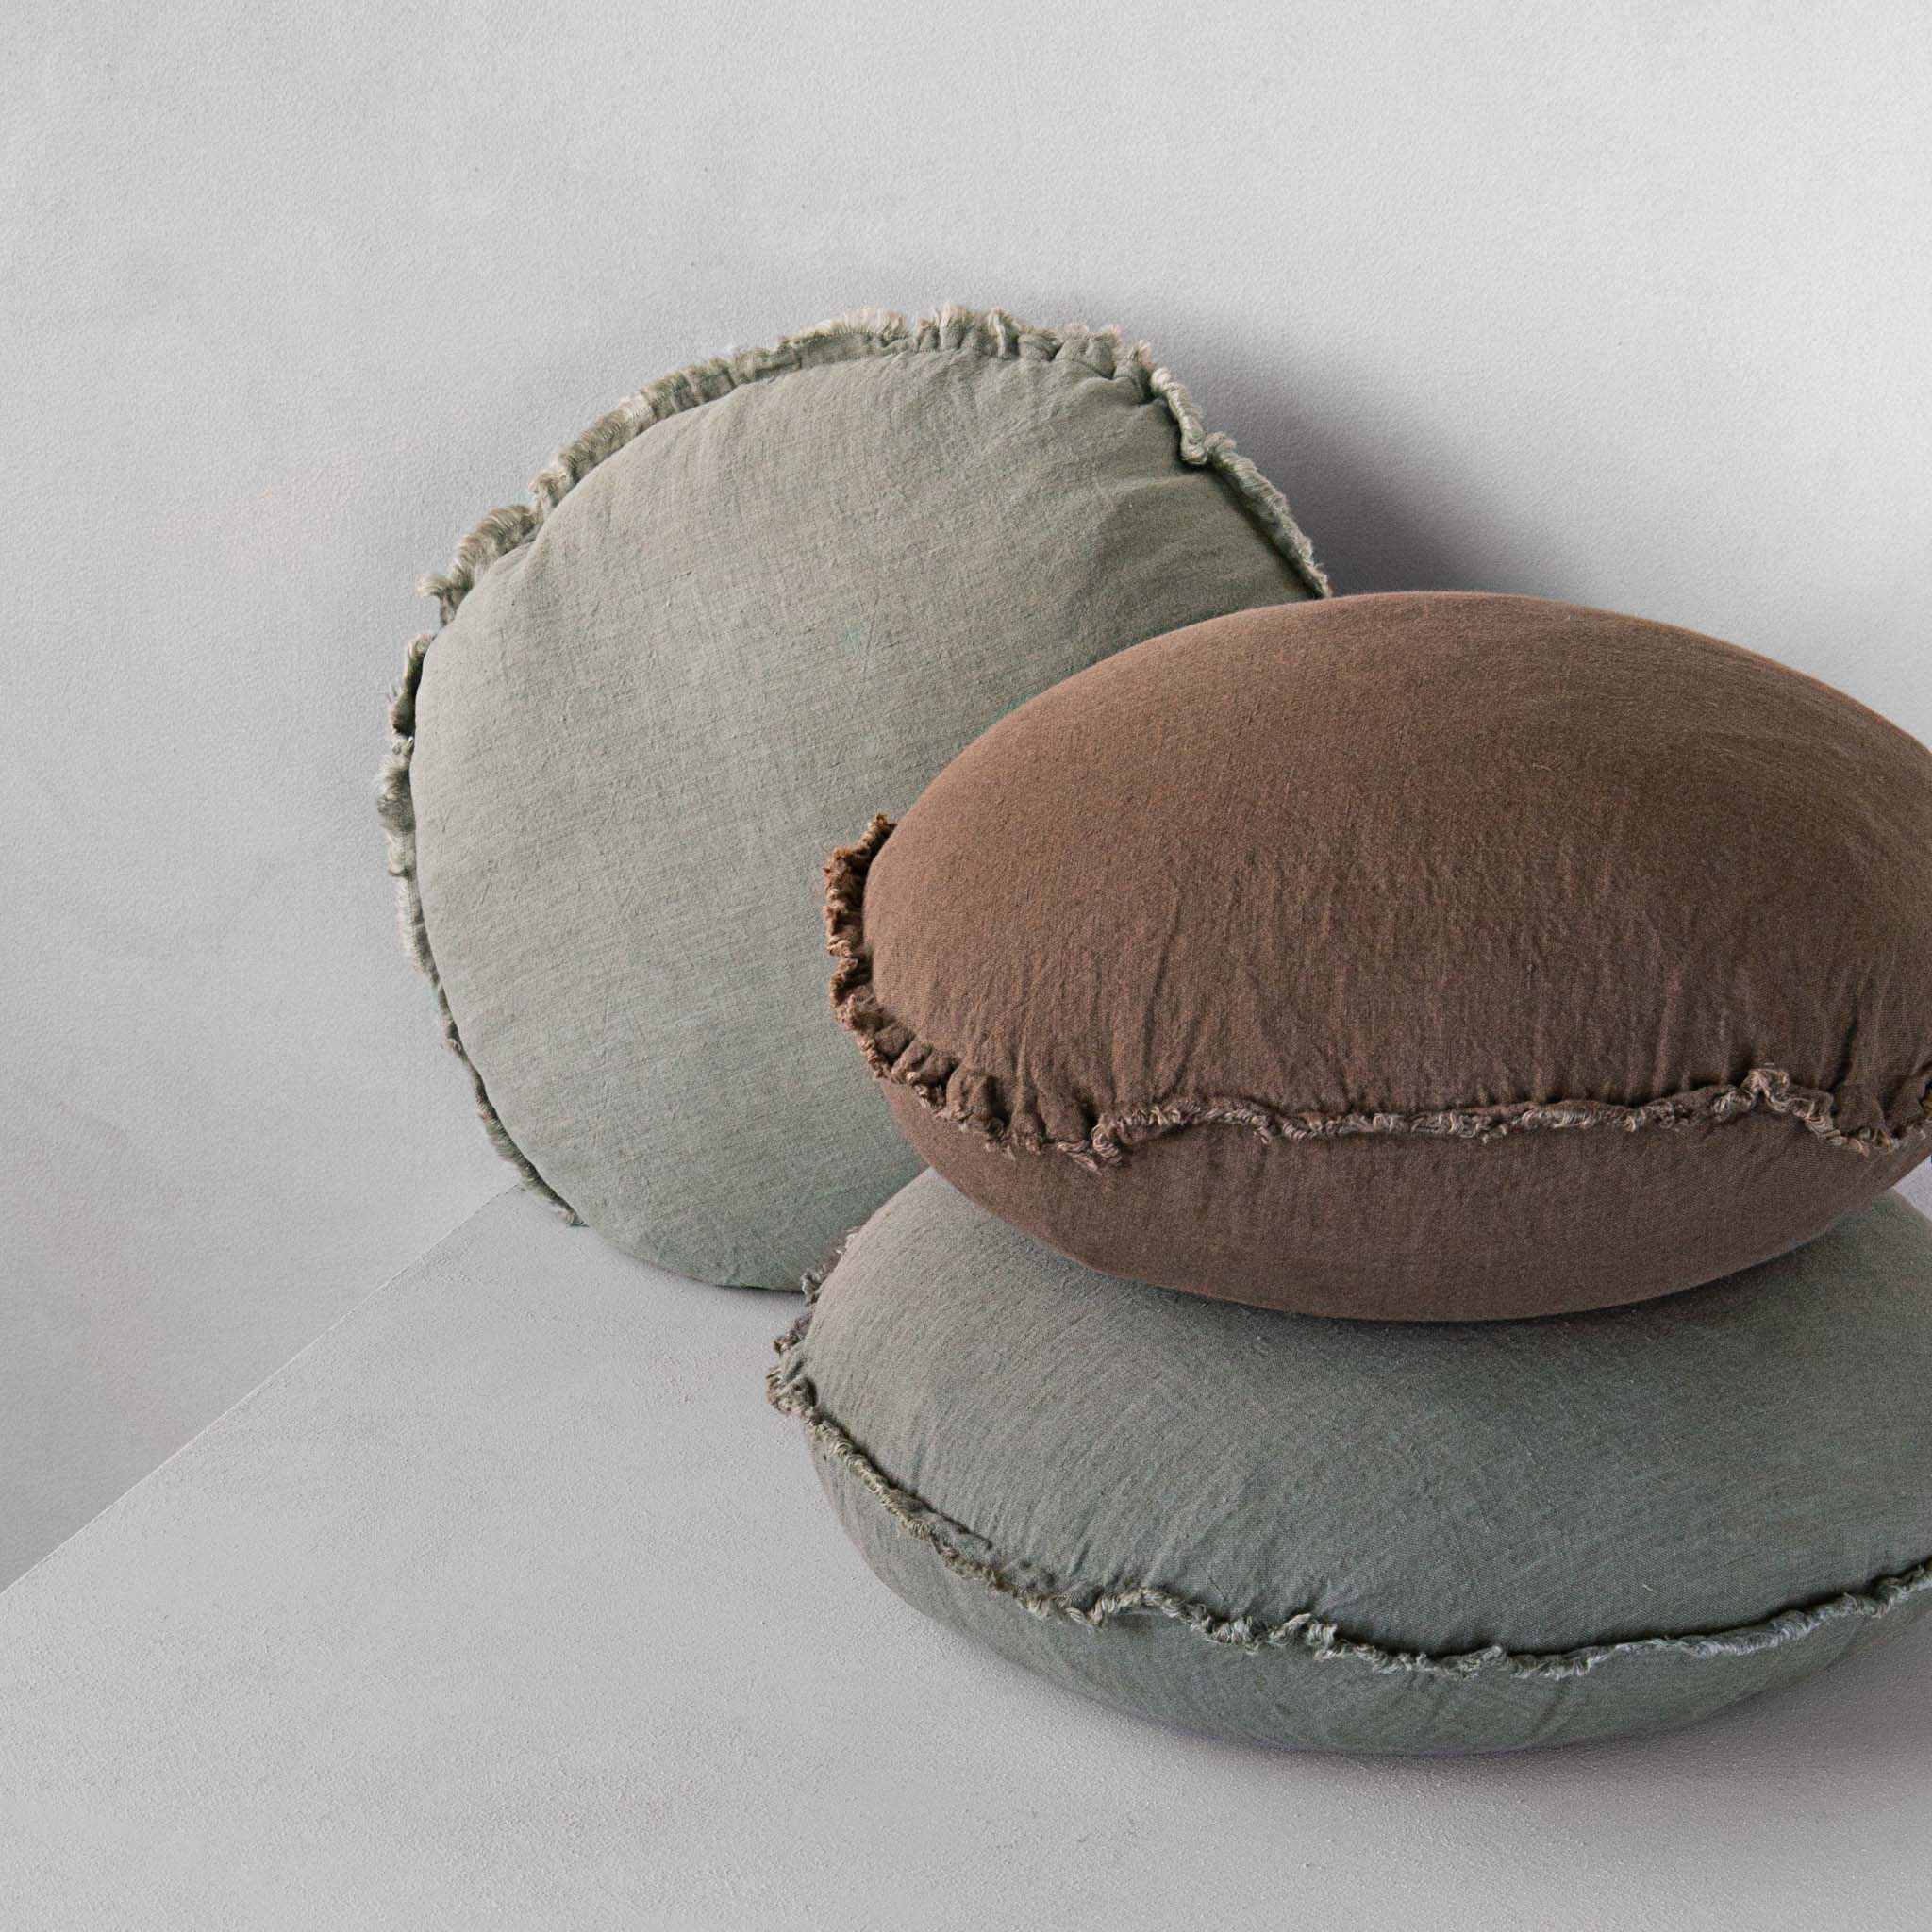 Round Linen Cushion | Chocolate Brown | Hale Mercantile Co.